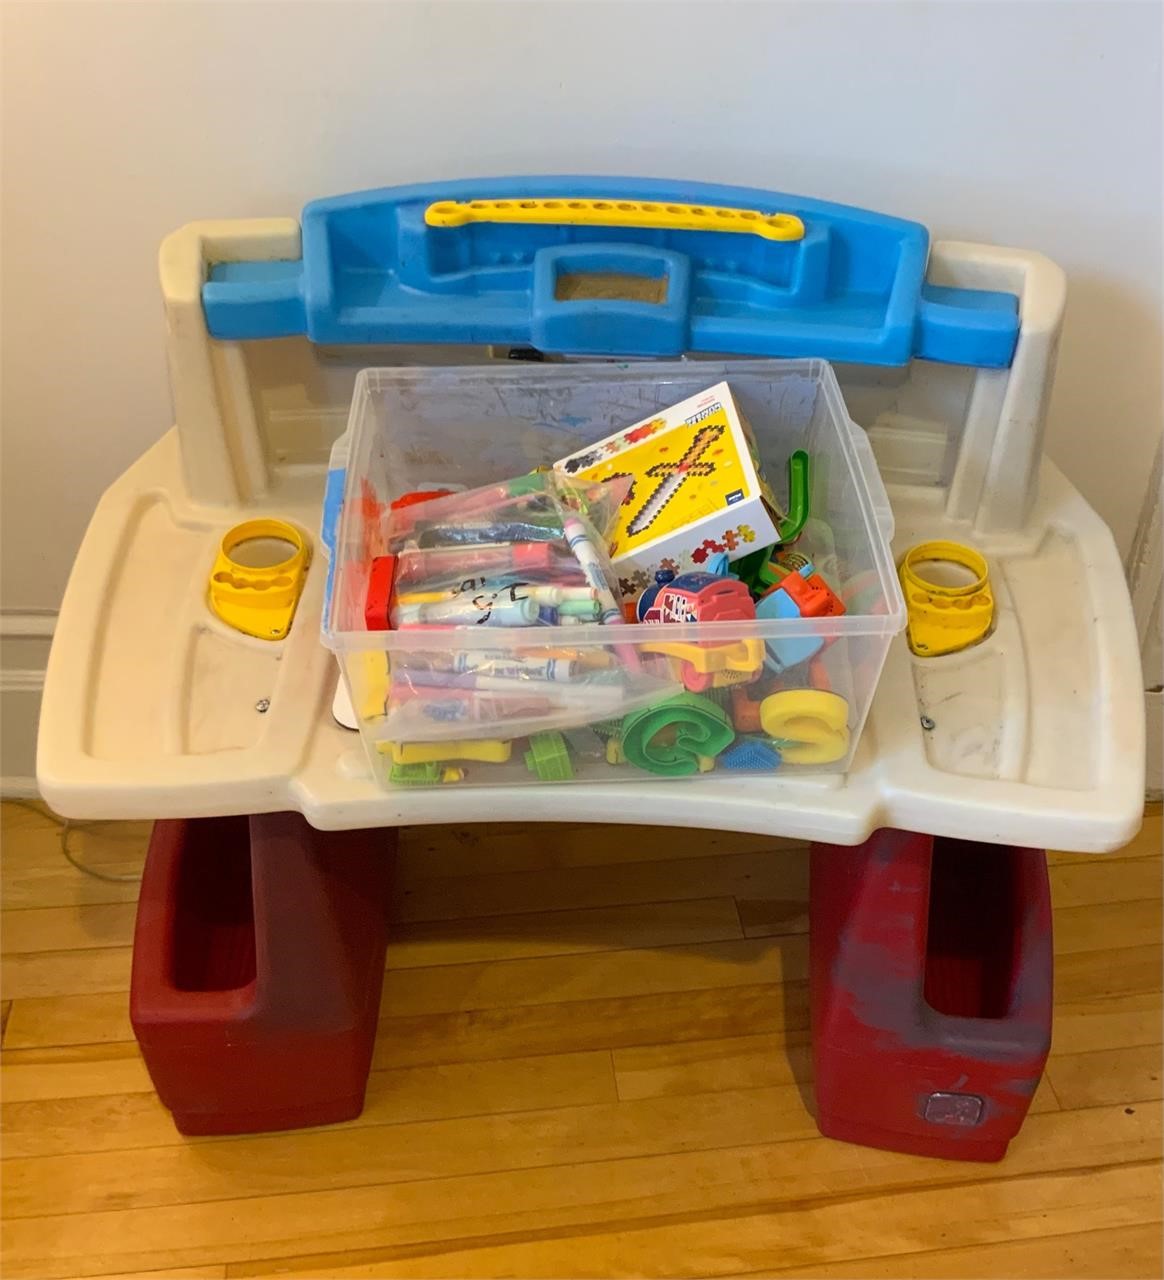 Toddler's Art Desk, Markers, Toys